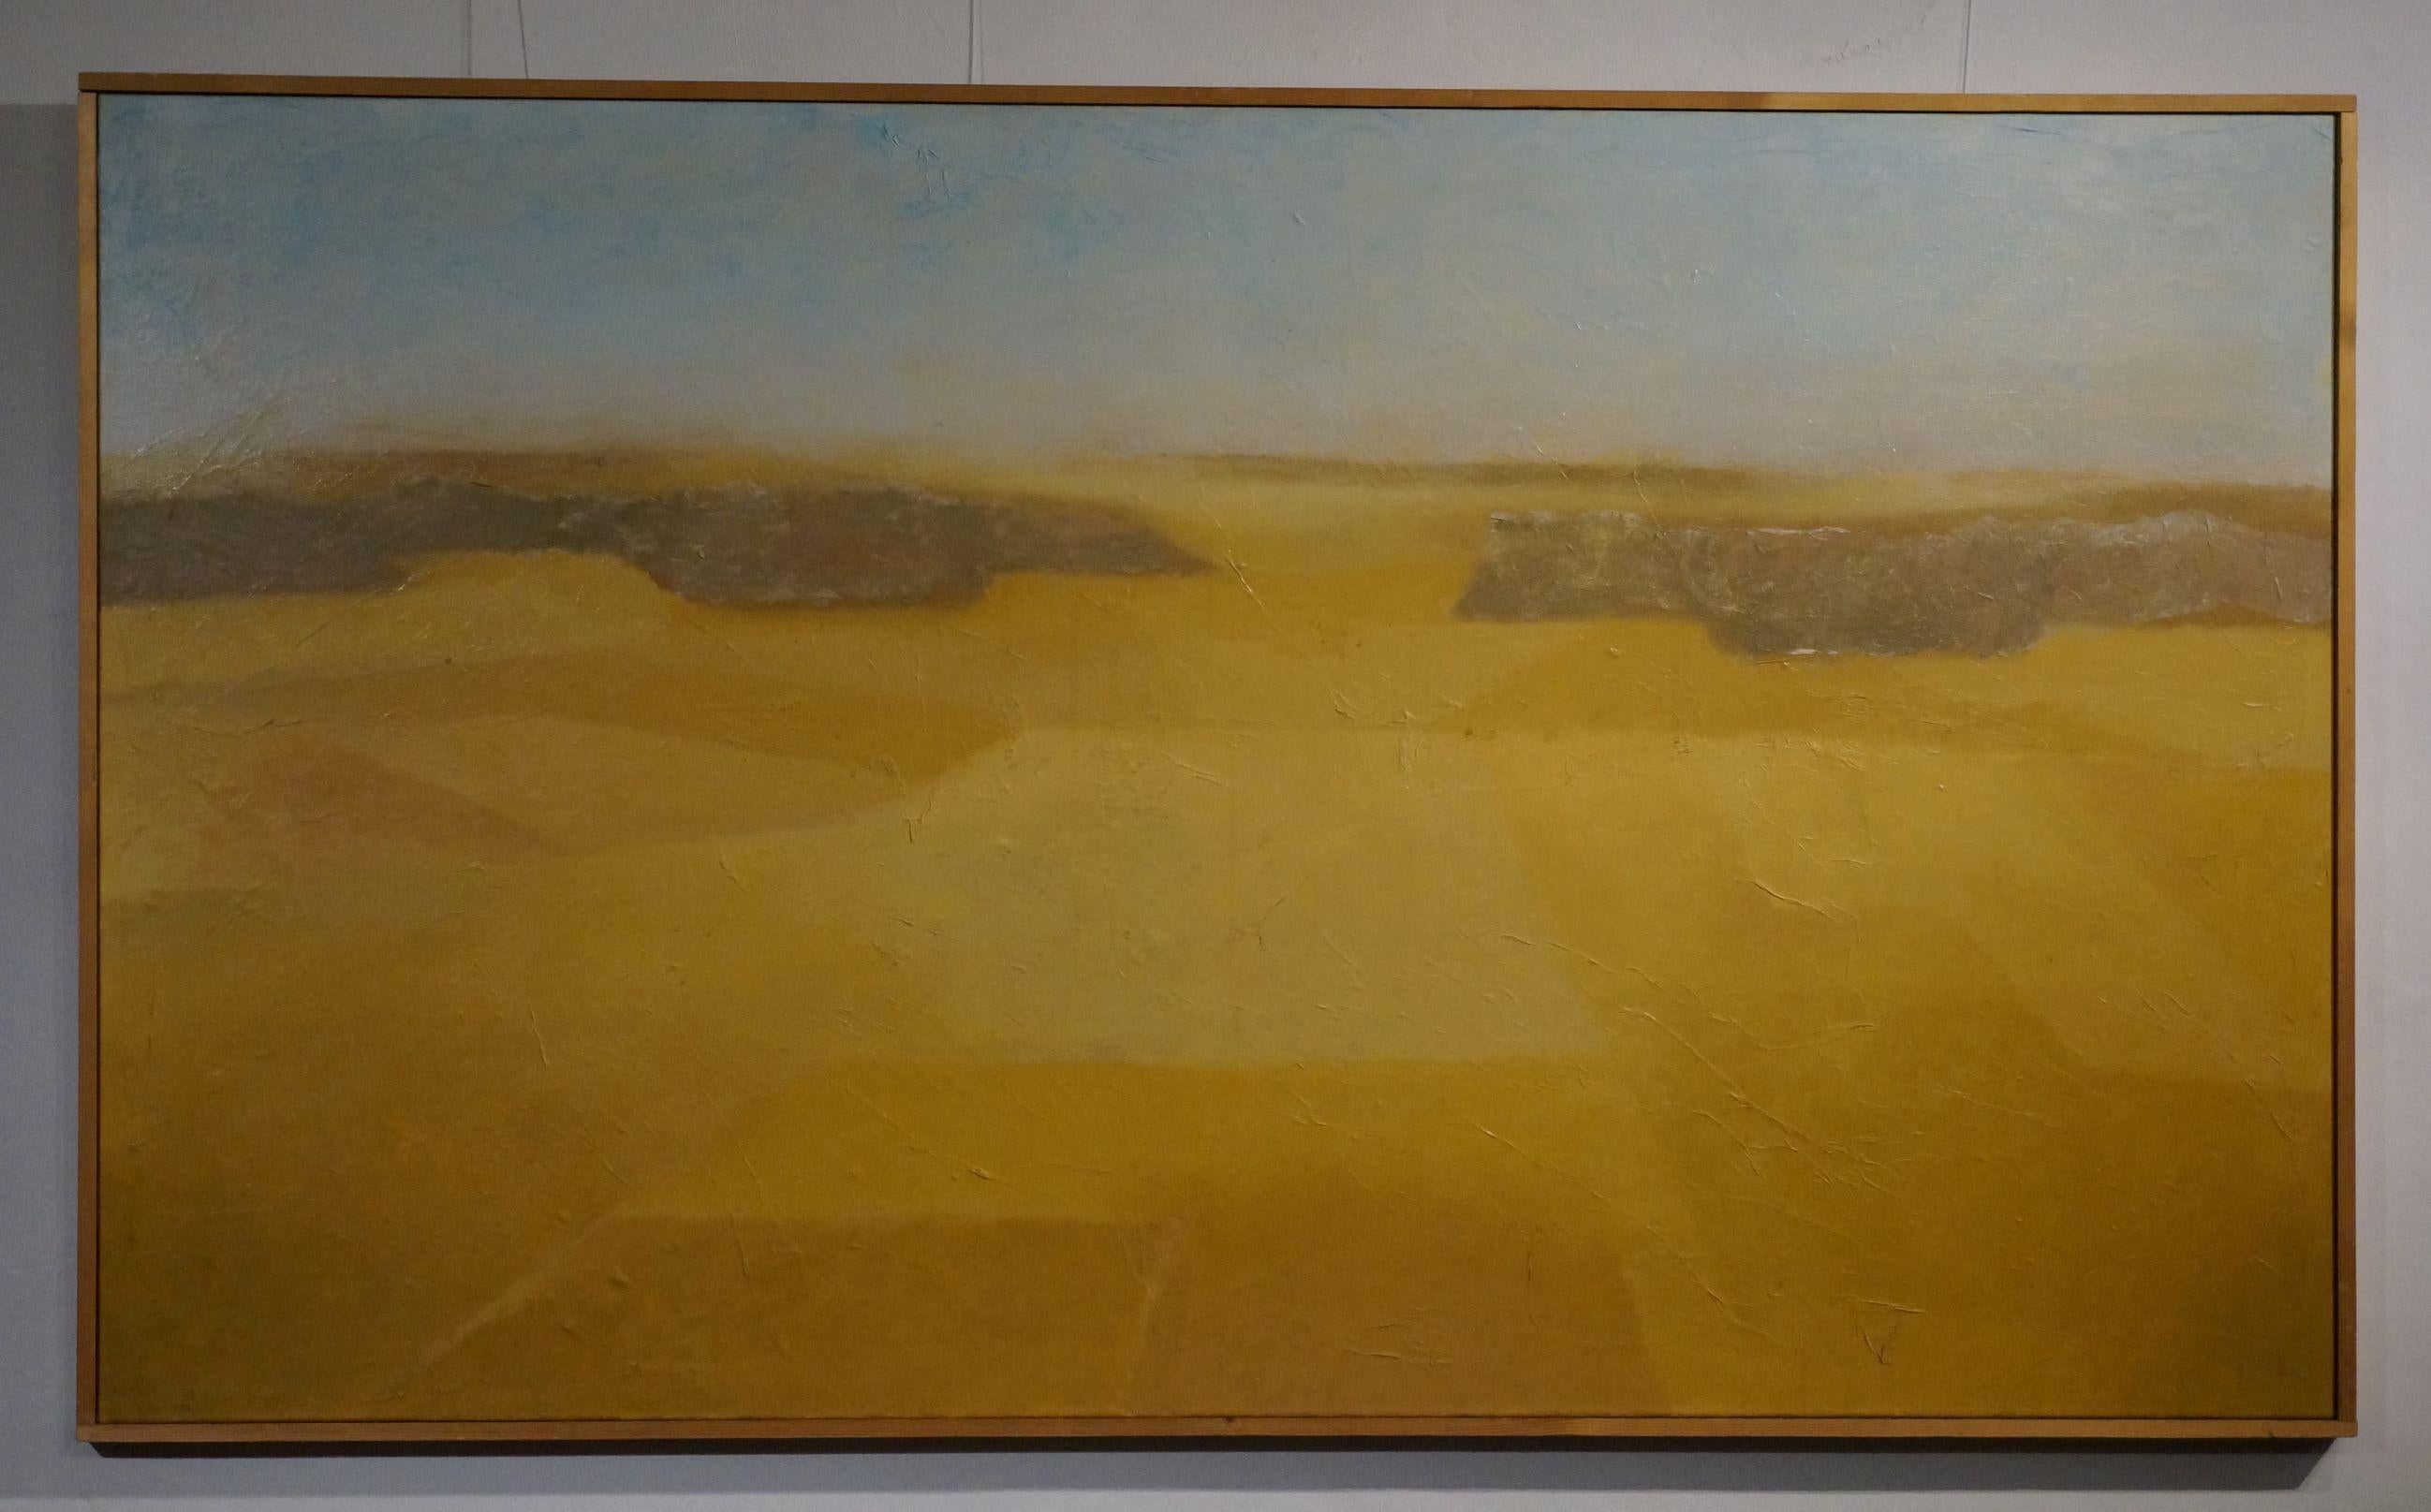 Spanish plateau - Painting by Joep Goeting